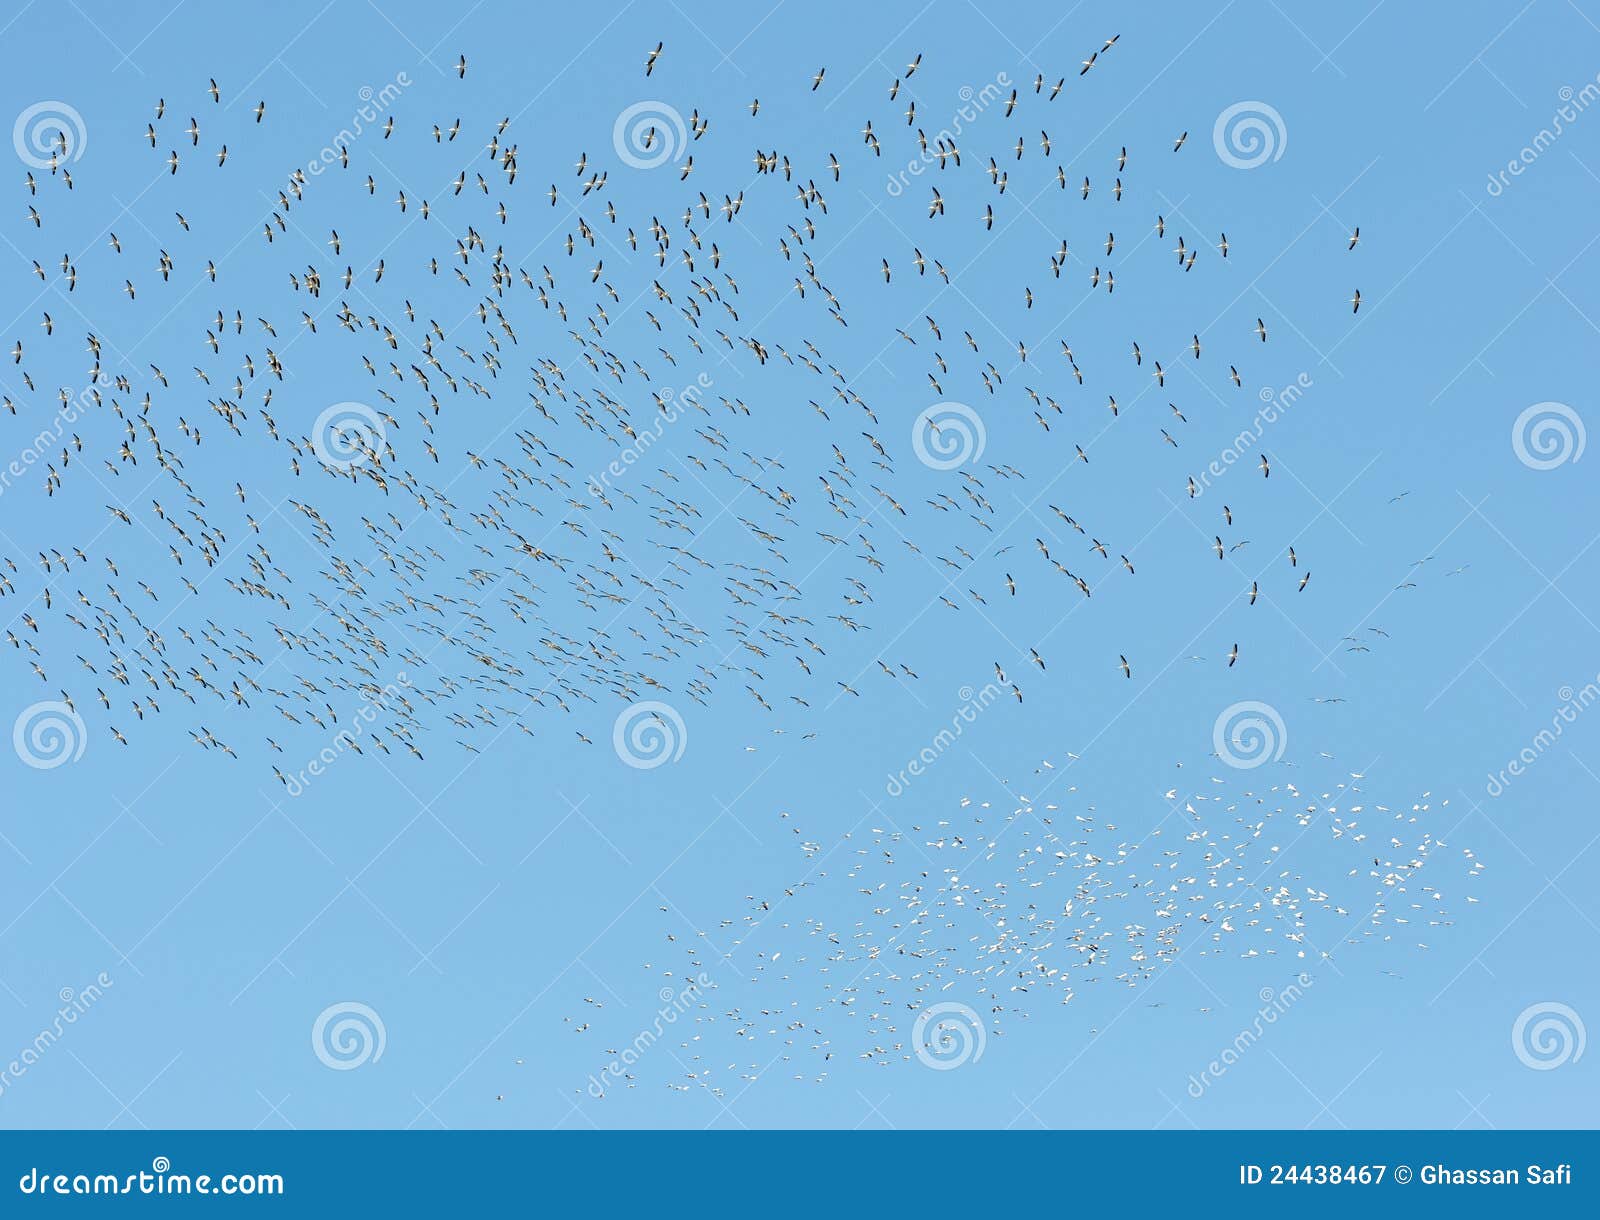 flock od migrating birds